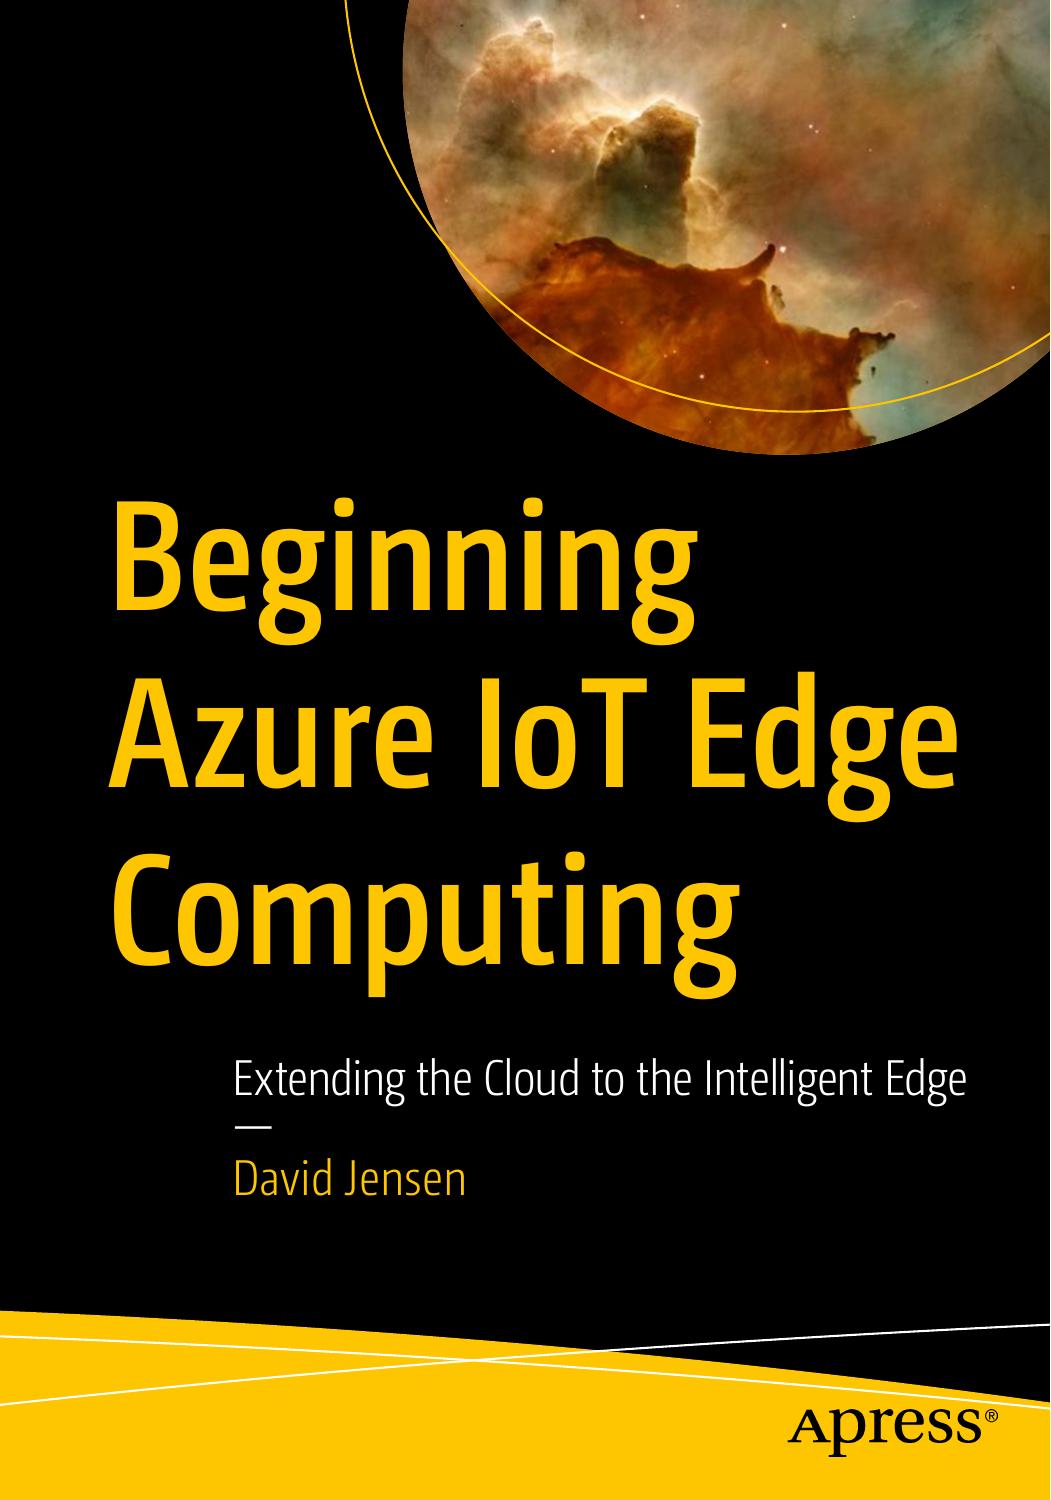 Beginning Azure IoT Edge Computing: Extending the Cloud to the Intelligent Edge